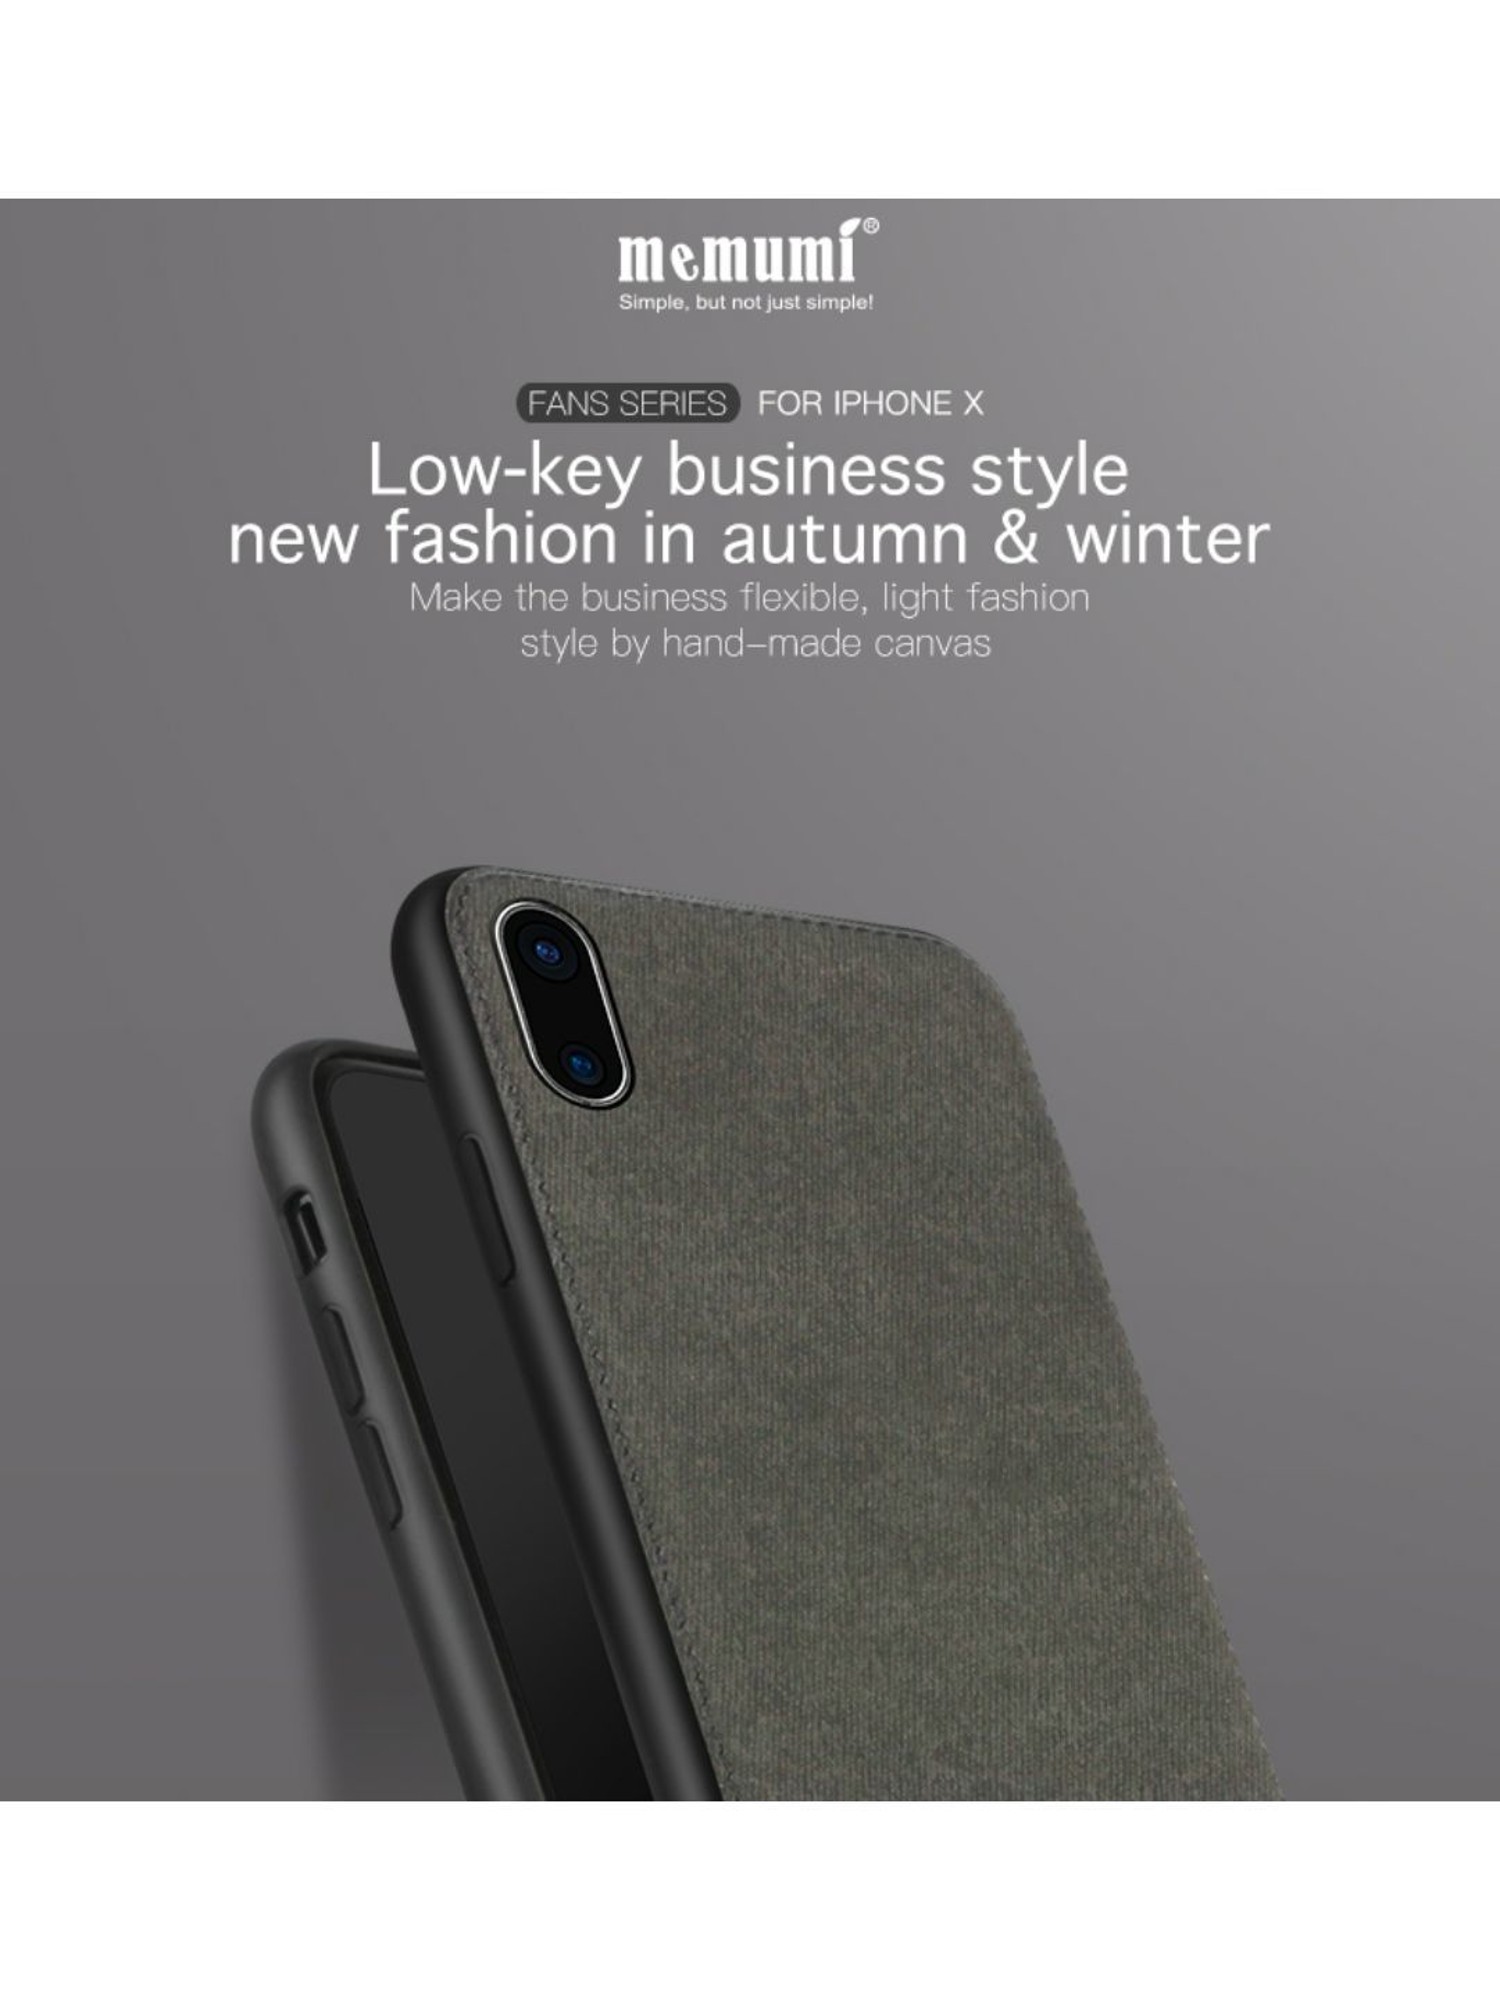 Luxury Leather Canvas Apple iPhone Samsung Galaxy Case